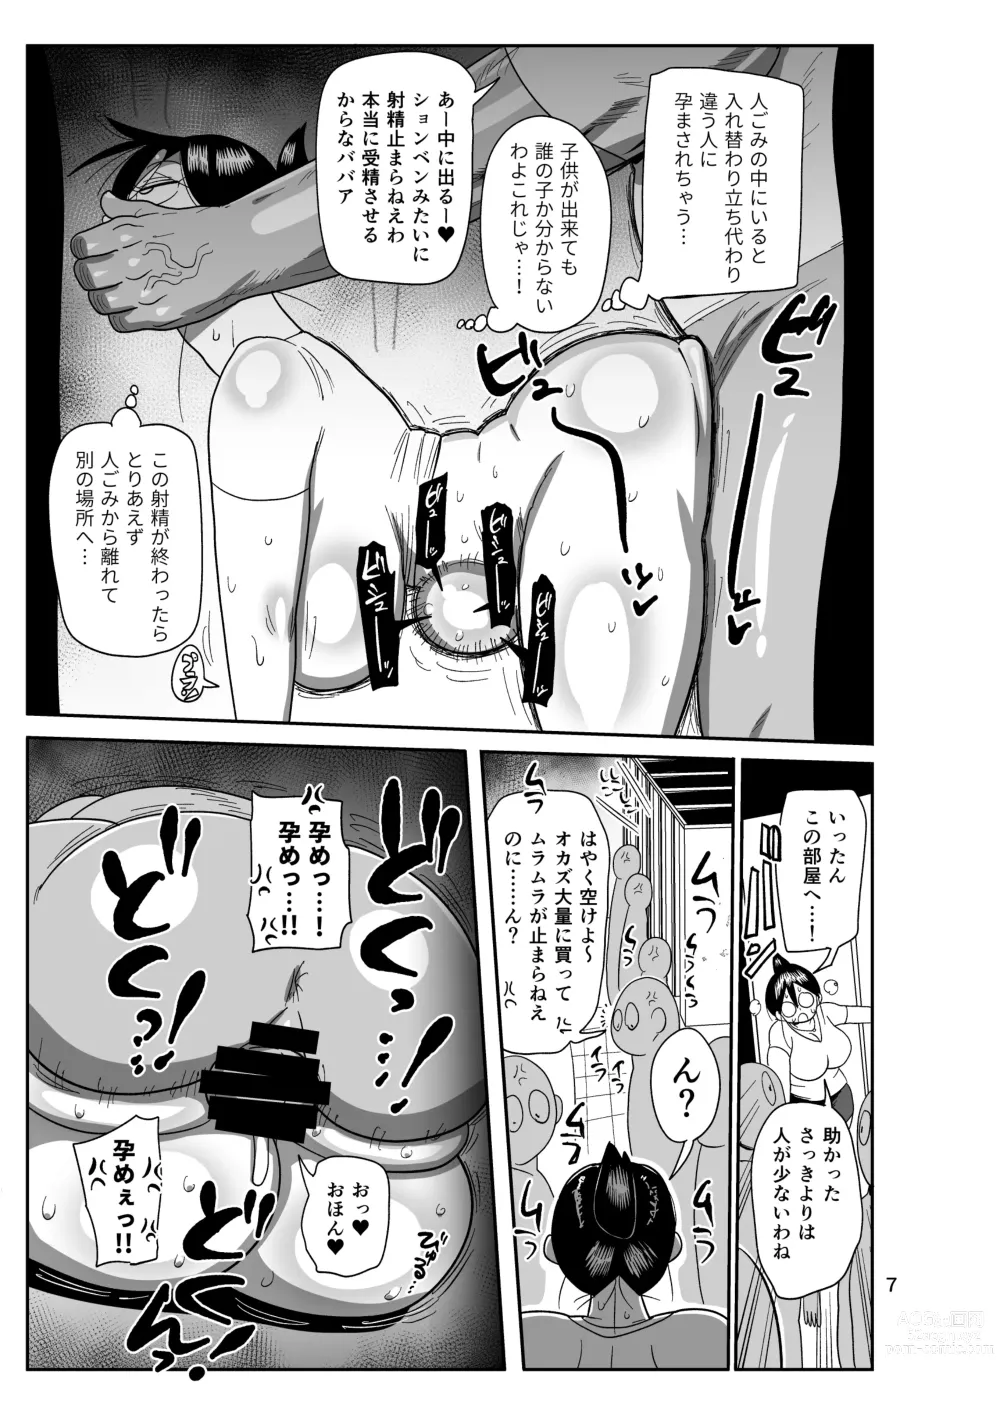 Page 7 of doujinshi Arai-san komike niiku